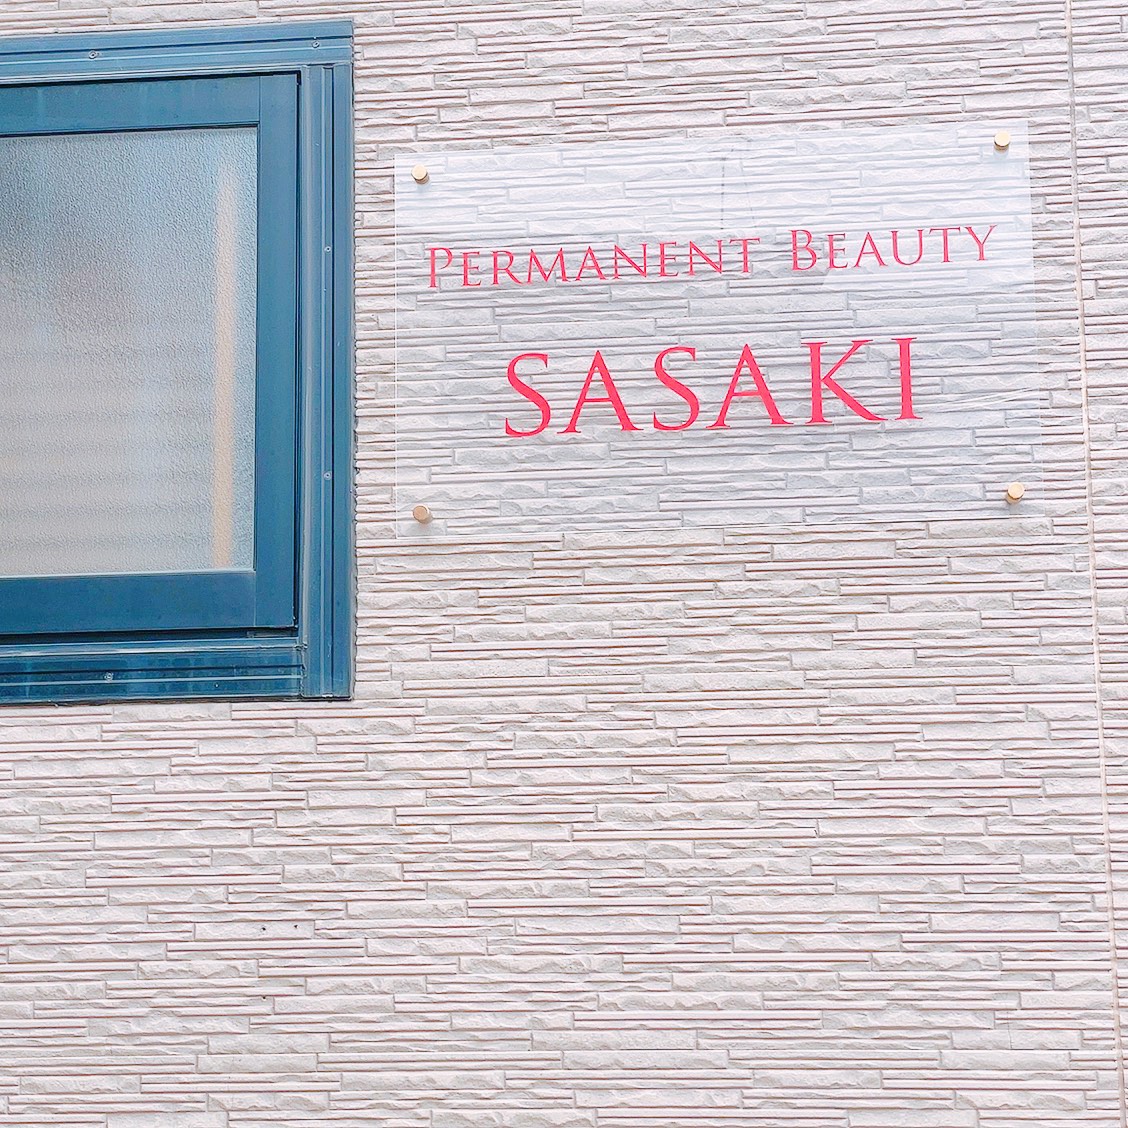 Permanent Beauty SASAKI